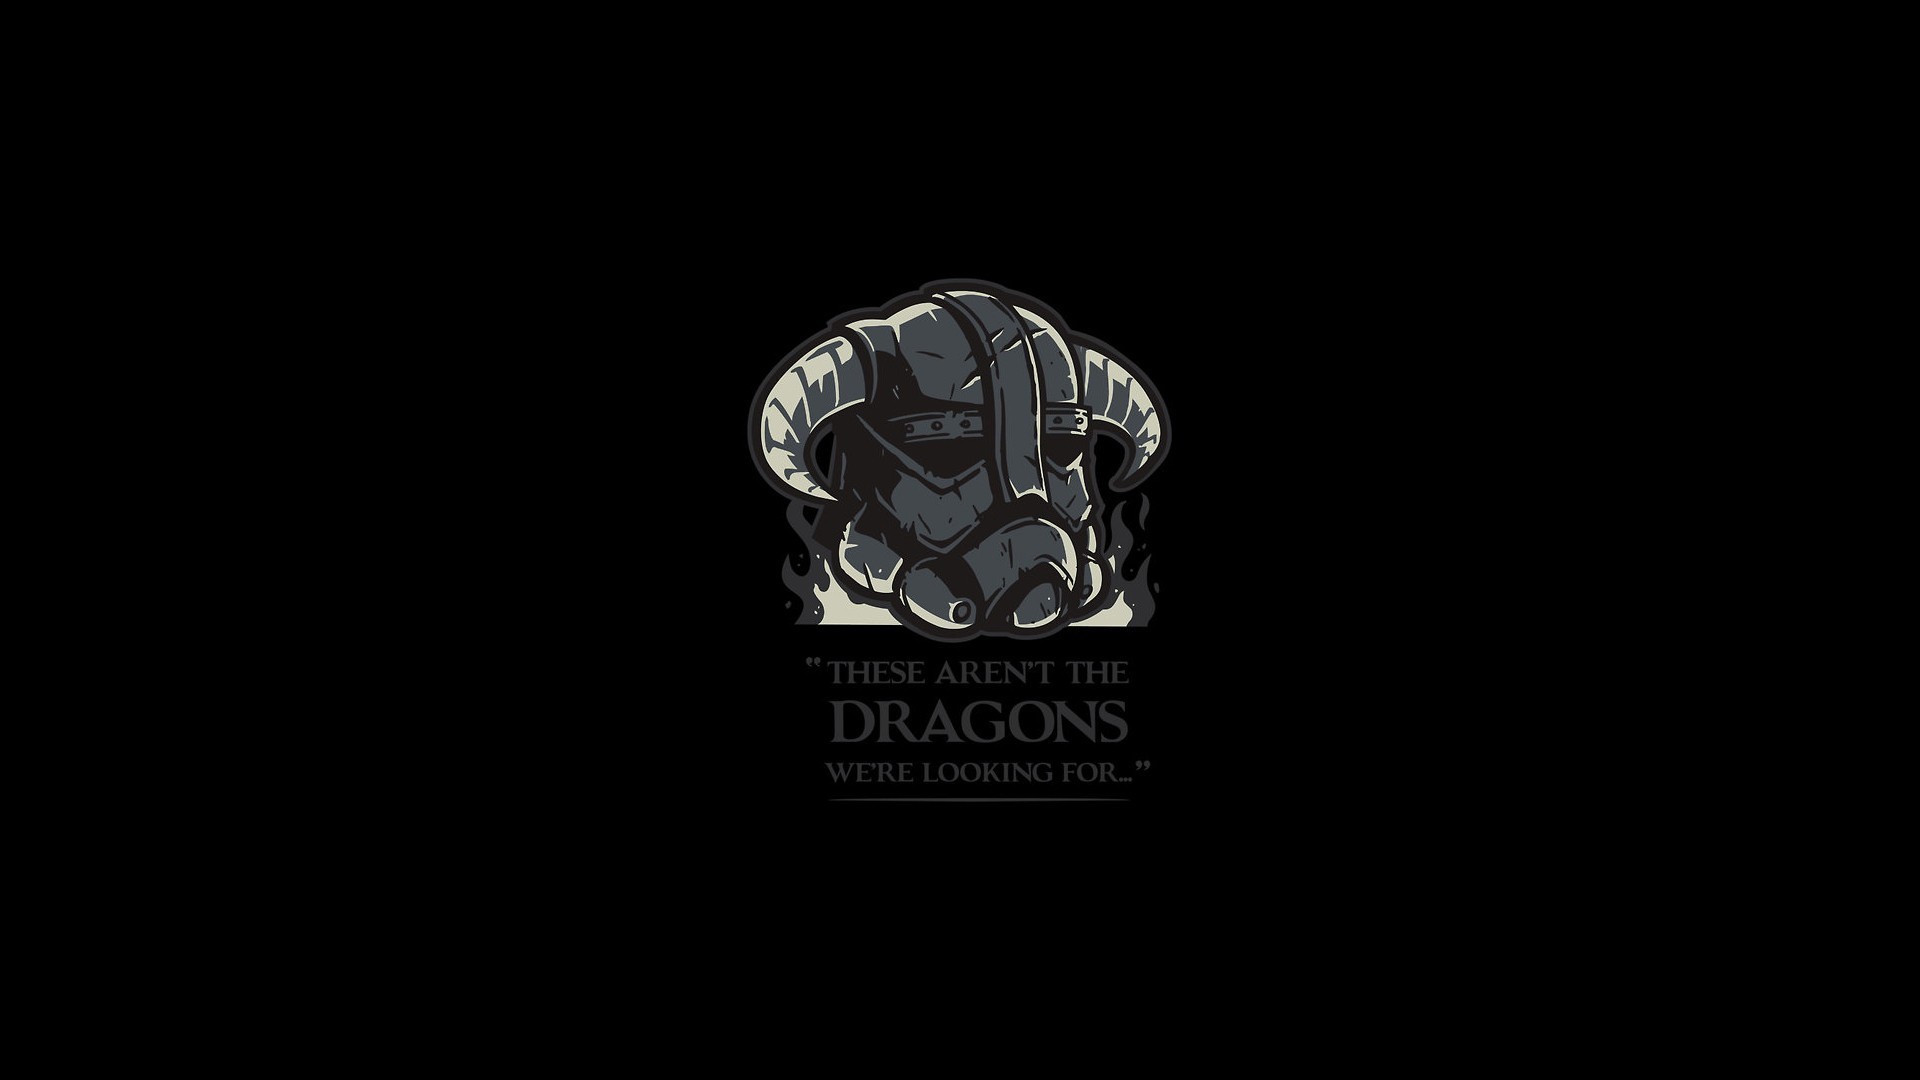 1920x1080 Black Background Dragons Minimalistic Star Wars The Elder Scrolls V Skyrim